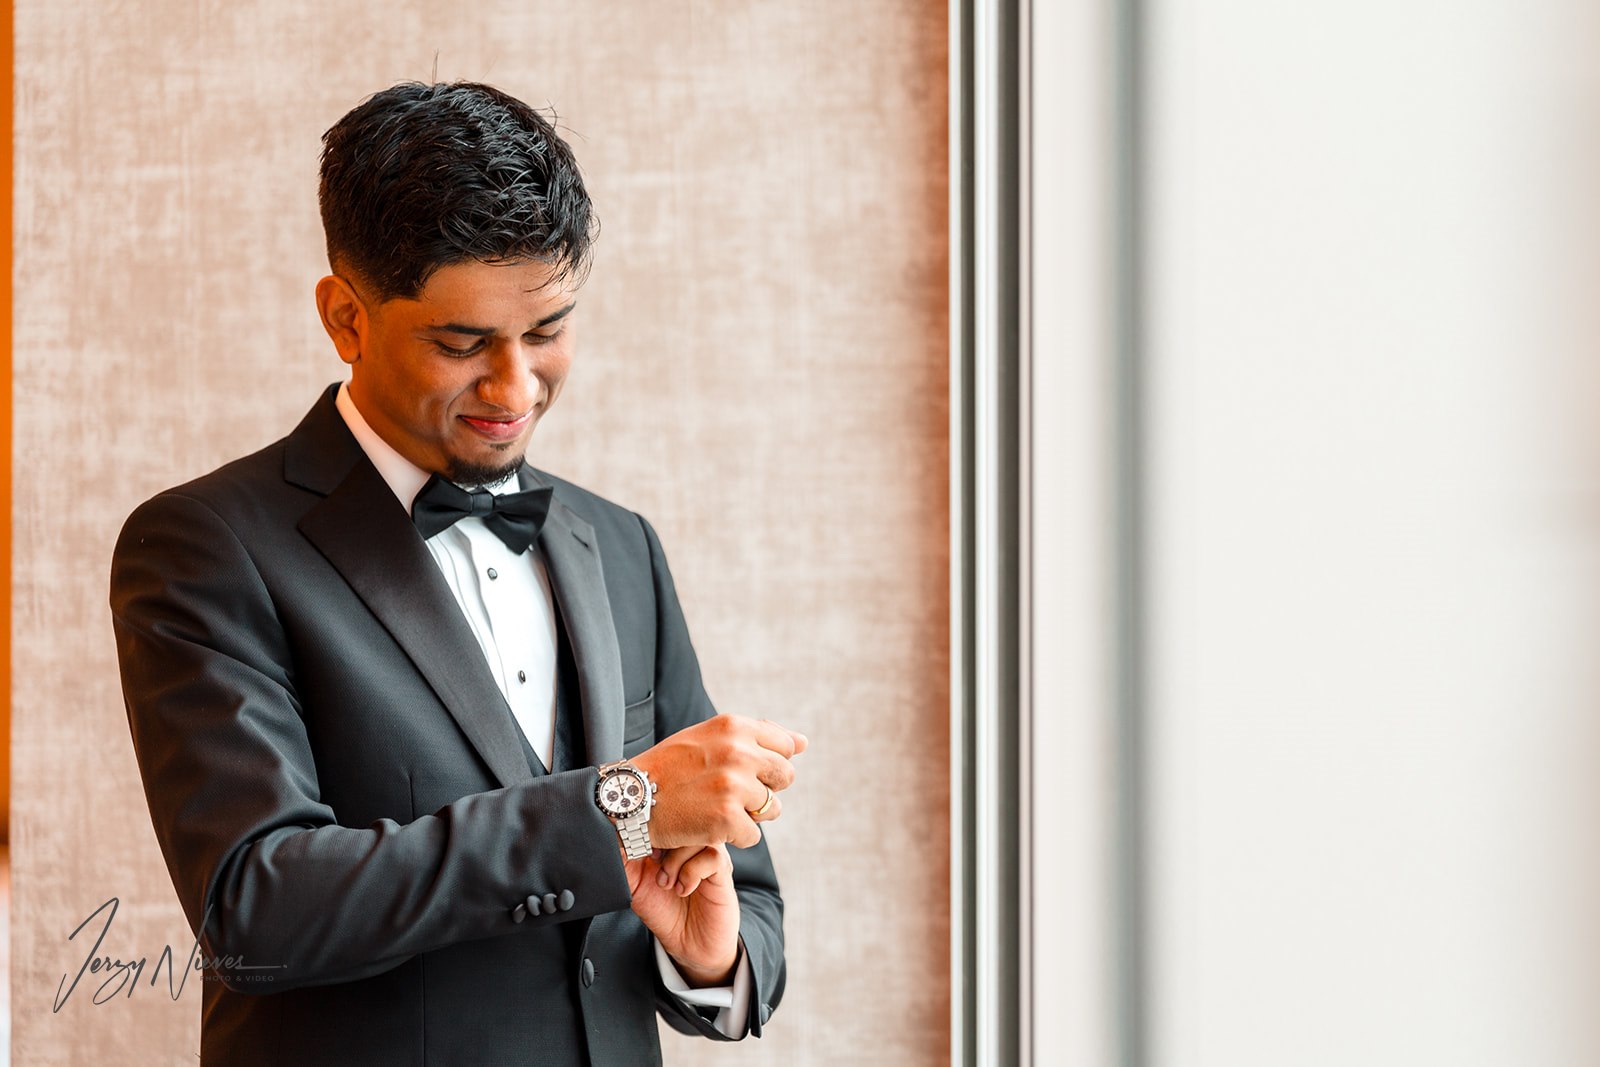 Ravin Adjusting His Watch in Traditional Tuxedo - Disney Swan Reserve Pre-Wedding